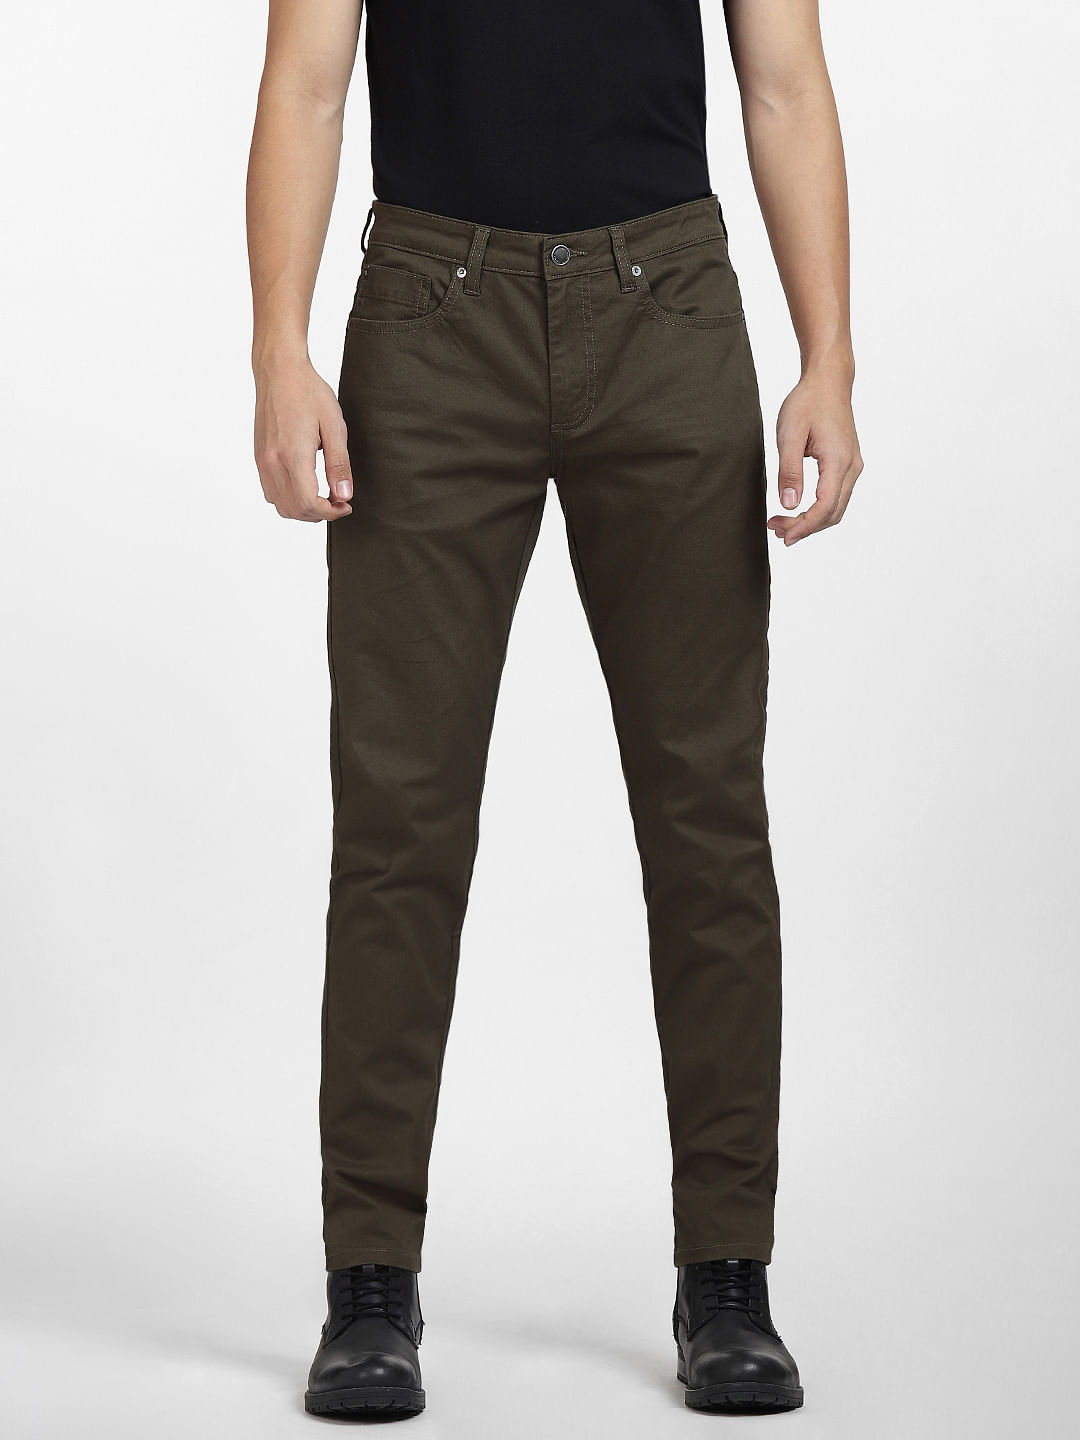 21 Mens Olive Green Tapered Leg Skinny Jeans 5 Pocket Pants 30x32 Slim Fit  New | eBay